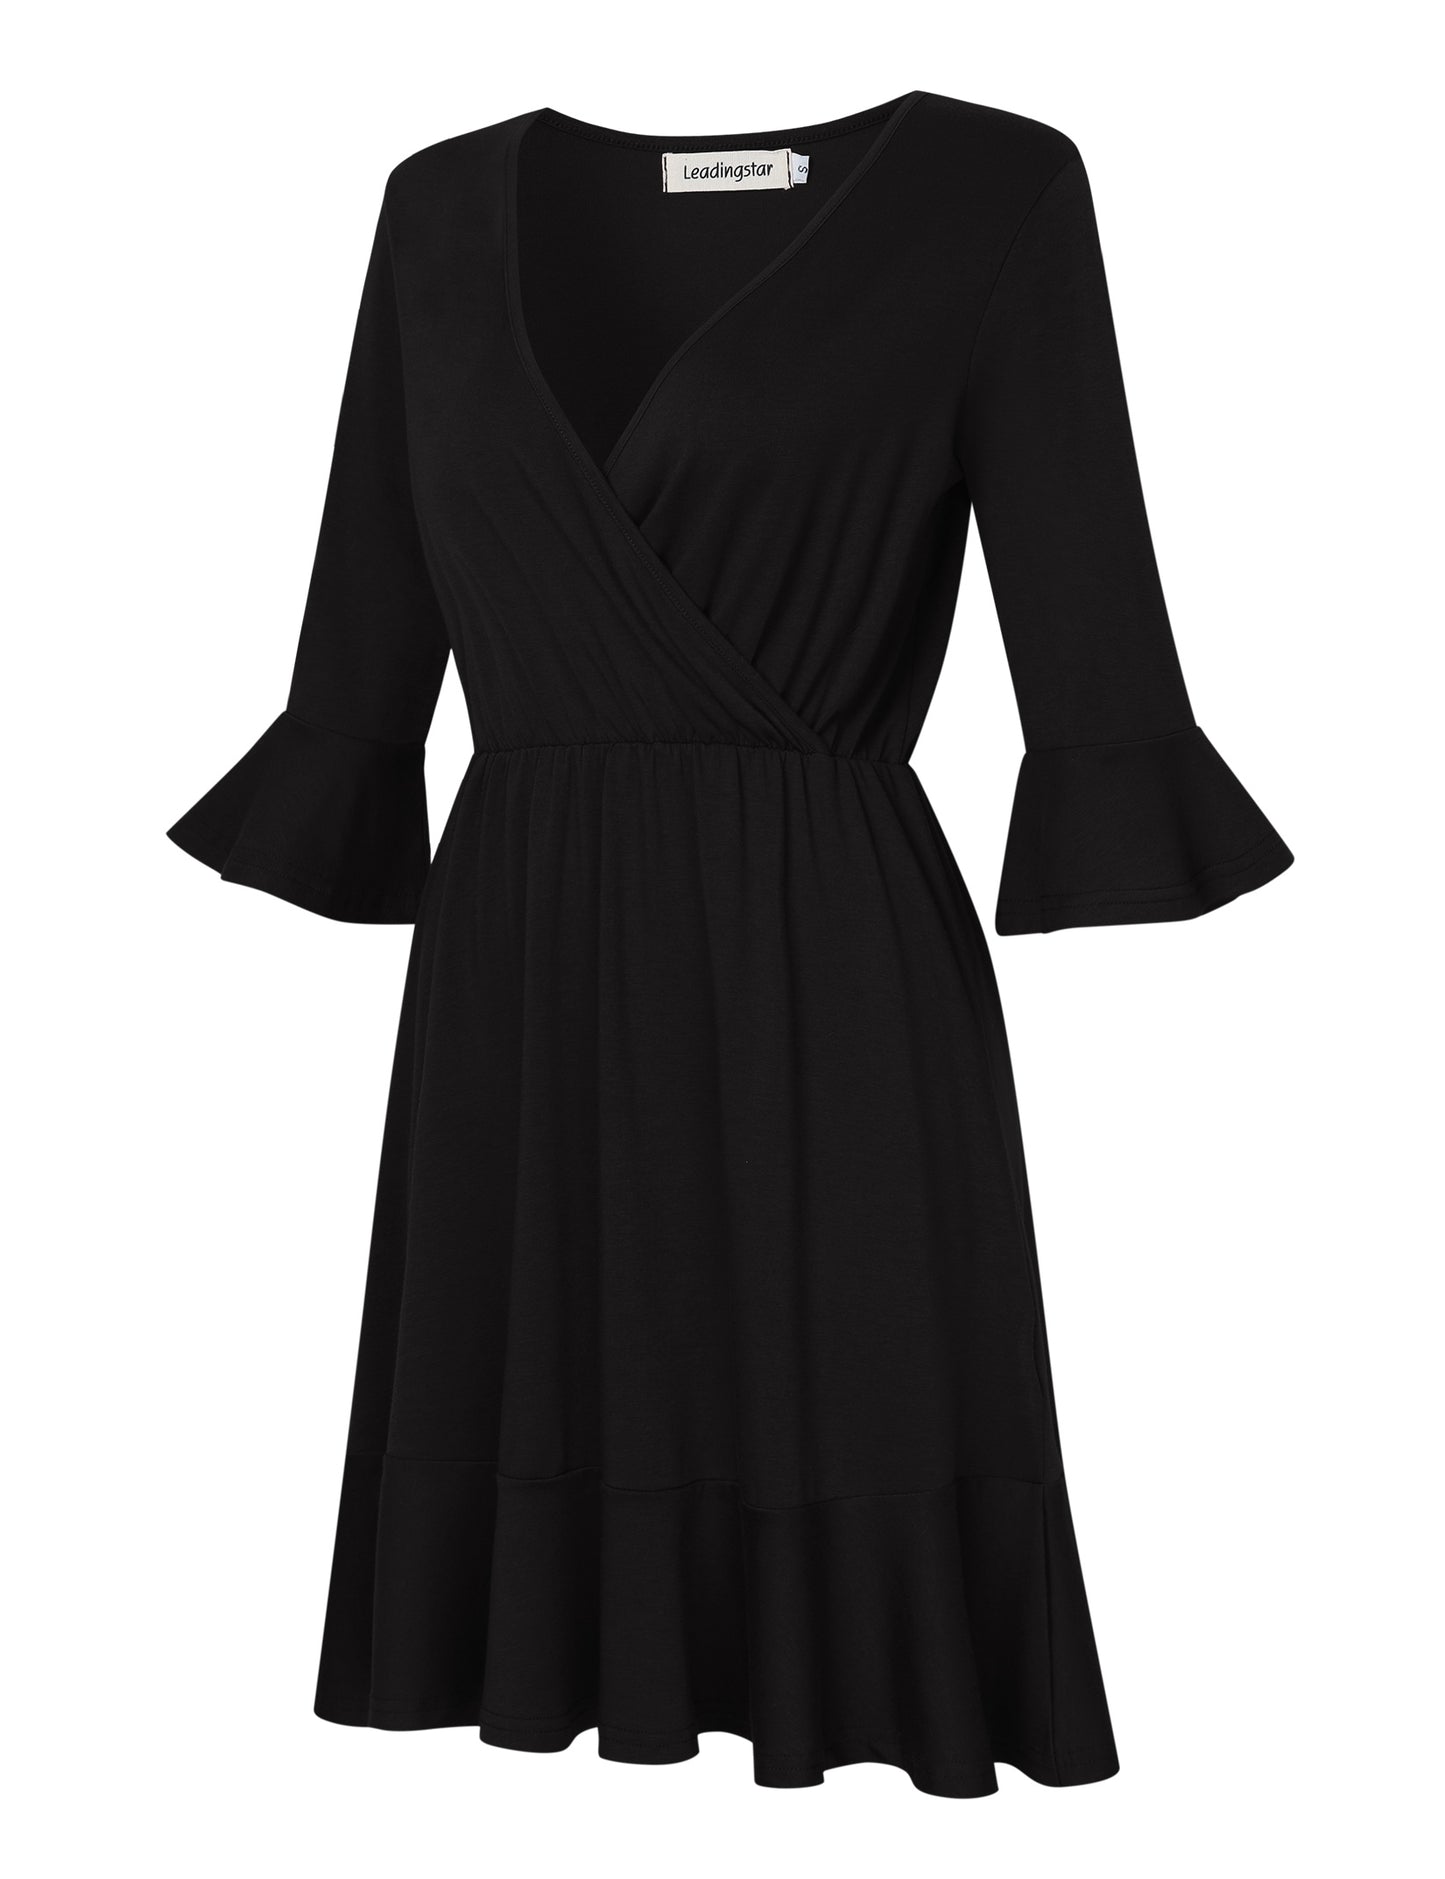 YESFASHION Women's Wrap Dress Fall 3/4 Sleeve Dresses